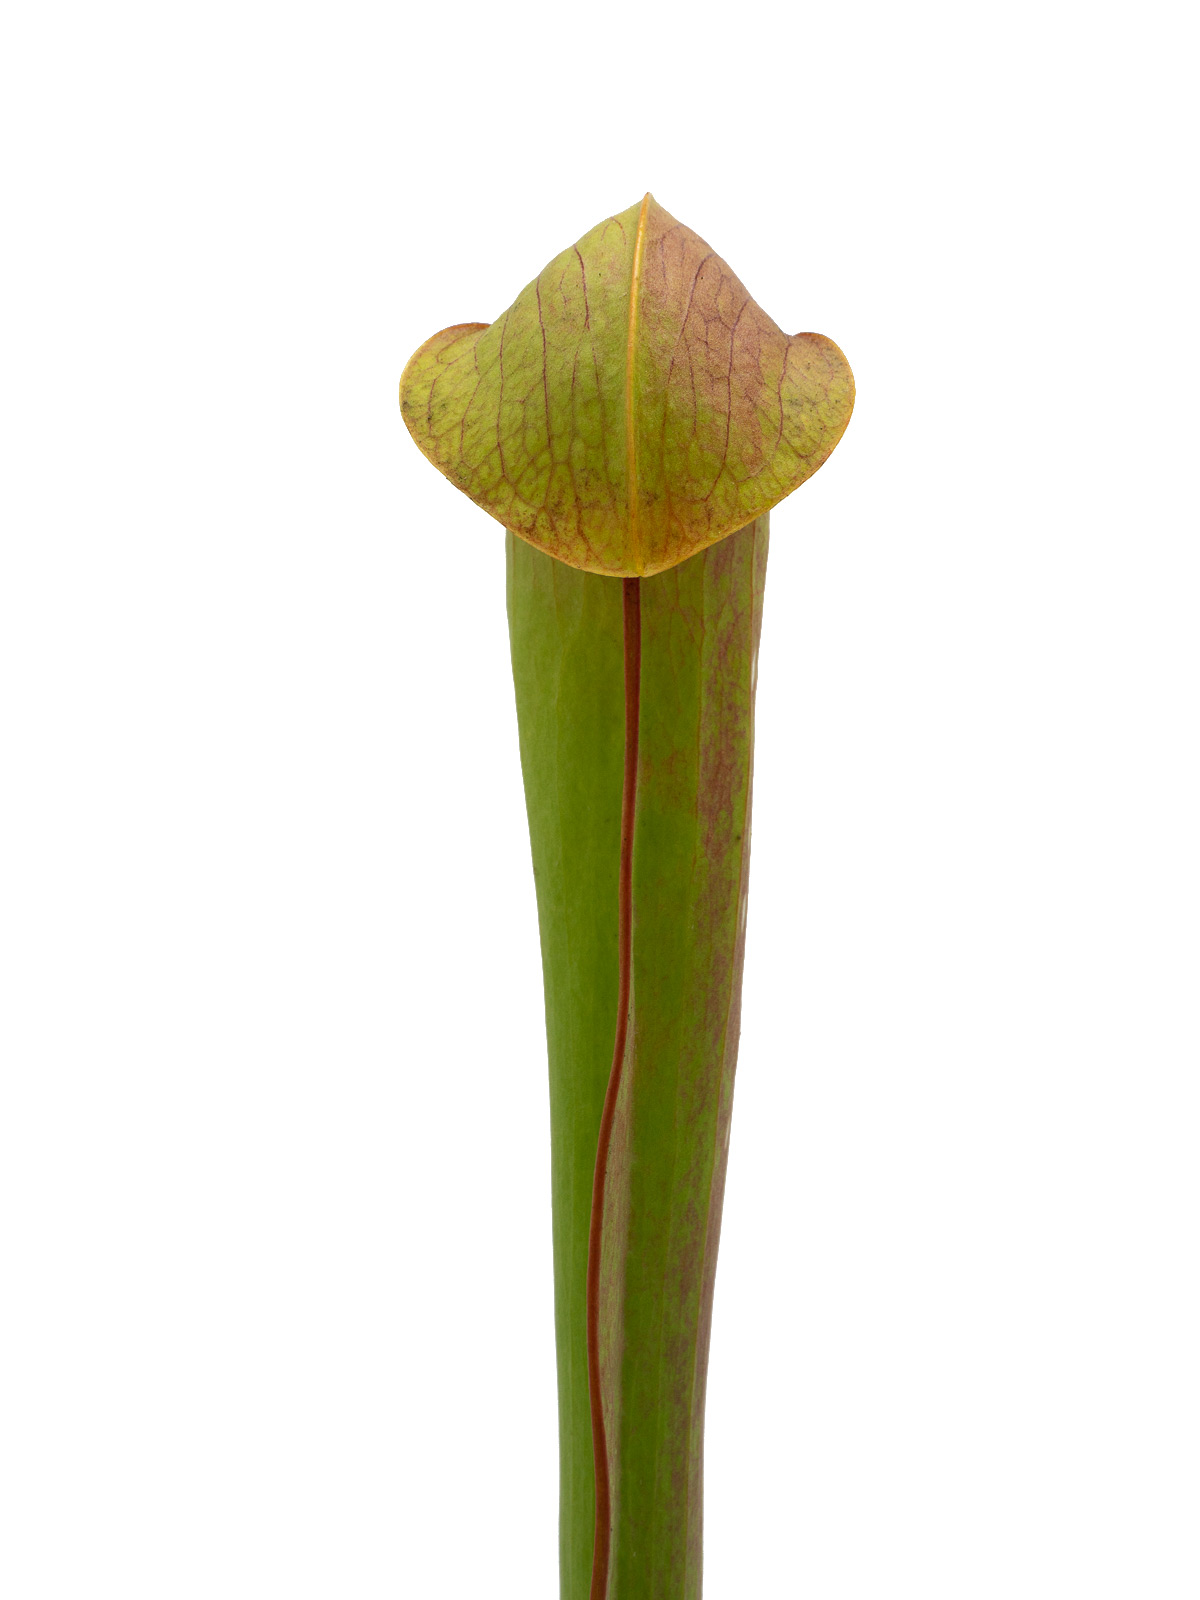 Sarracenia minor var. okefenokeensis - MK M15, Okefenokee Giant, south entrance